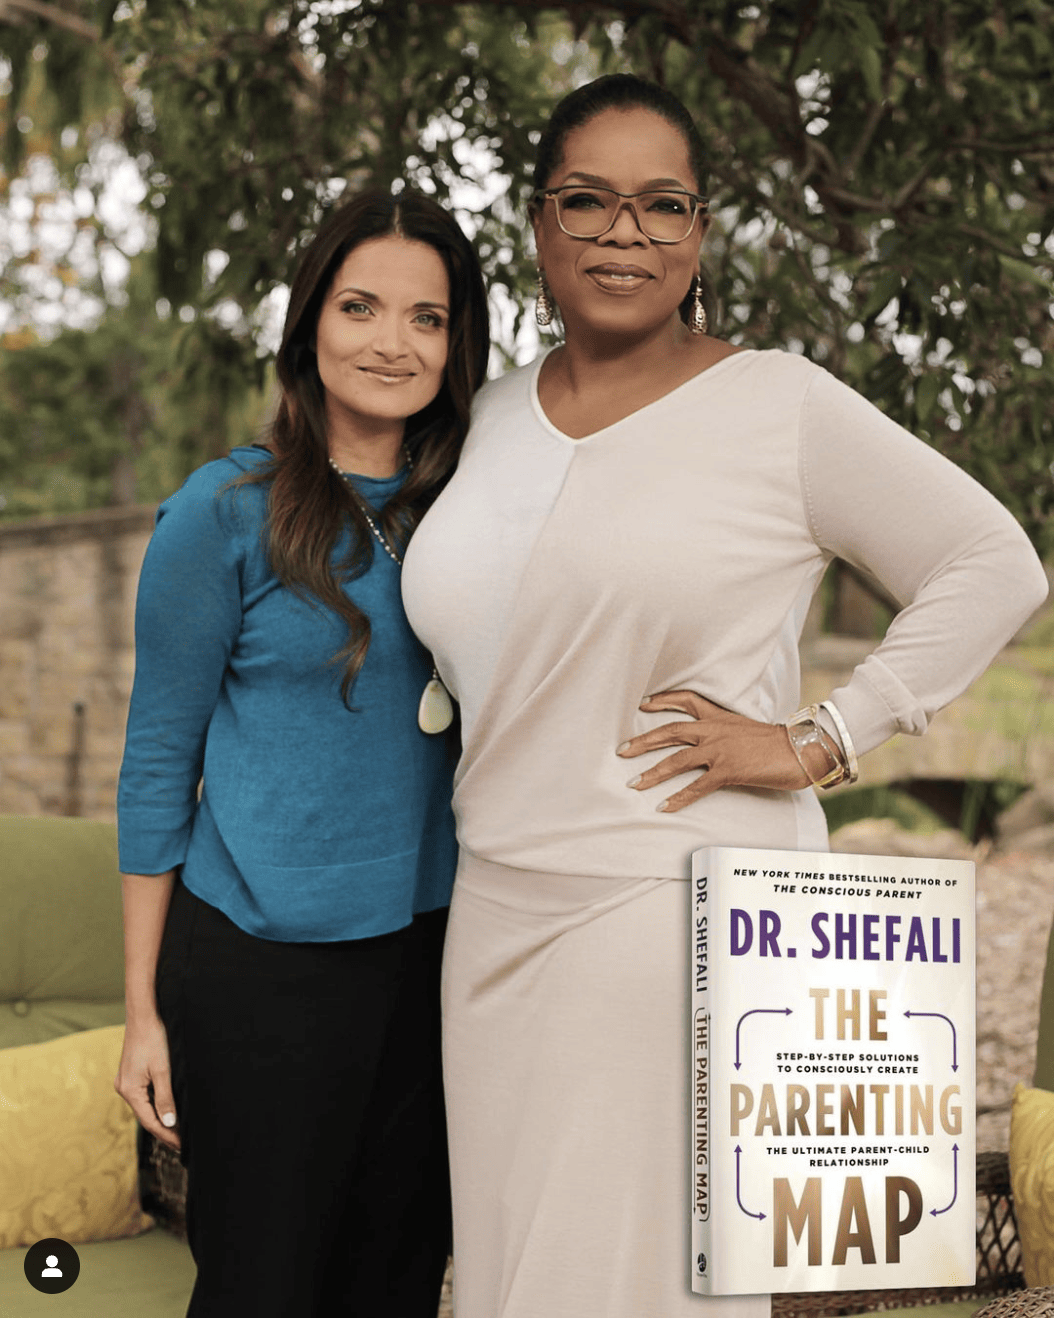 Dr. Shefali and Oprah Winfrey